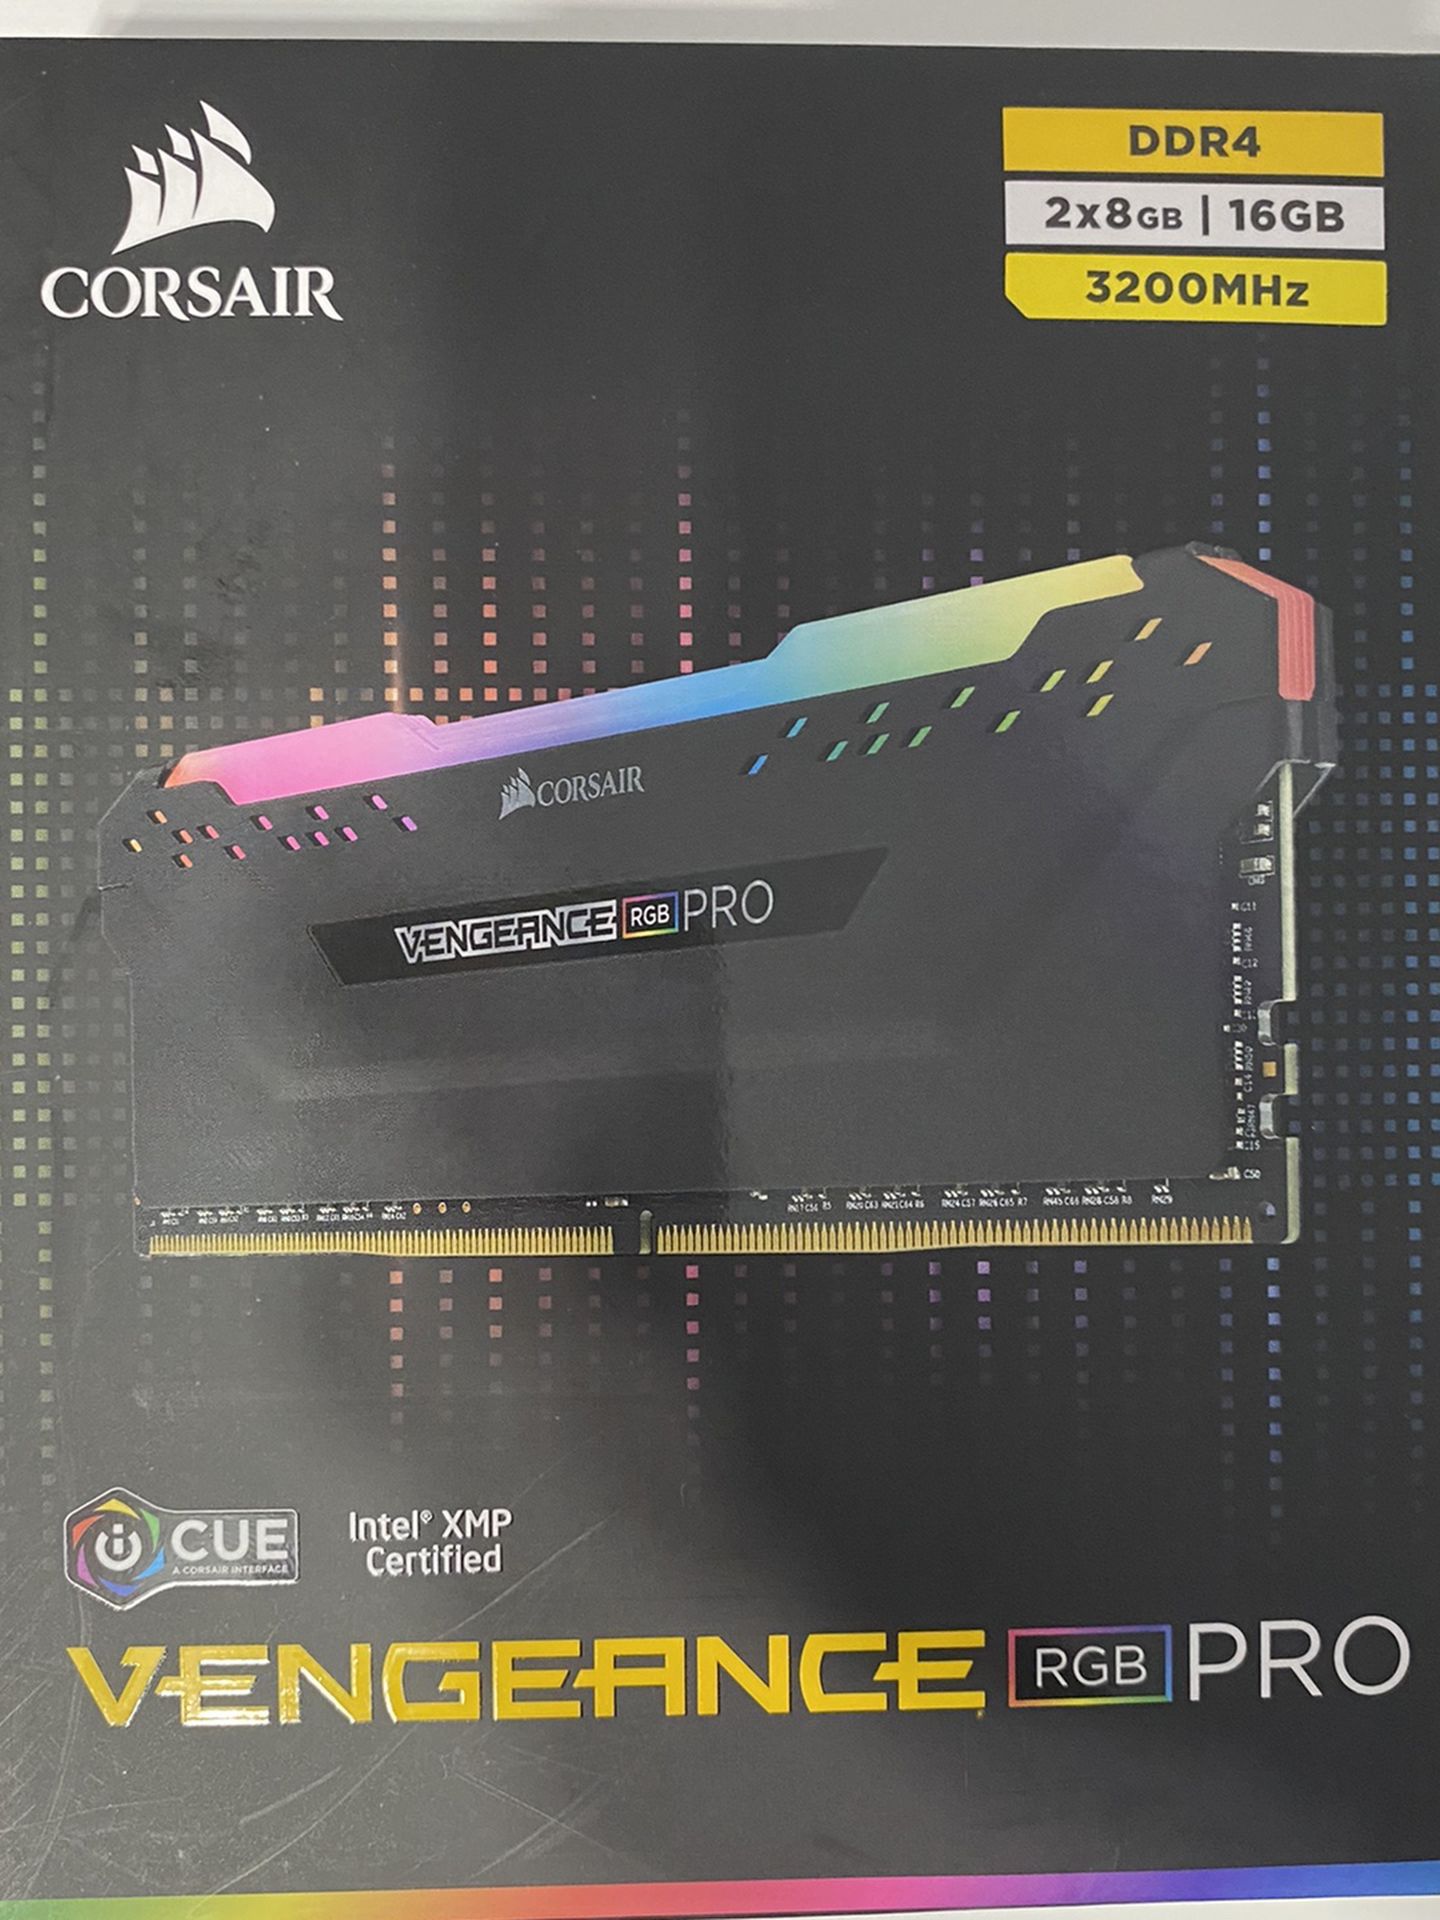 Corsair Vengeance RGB PRO 16GB (2x8GB) DDR4 3200MHz C16 LED Desktop Memory - Black